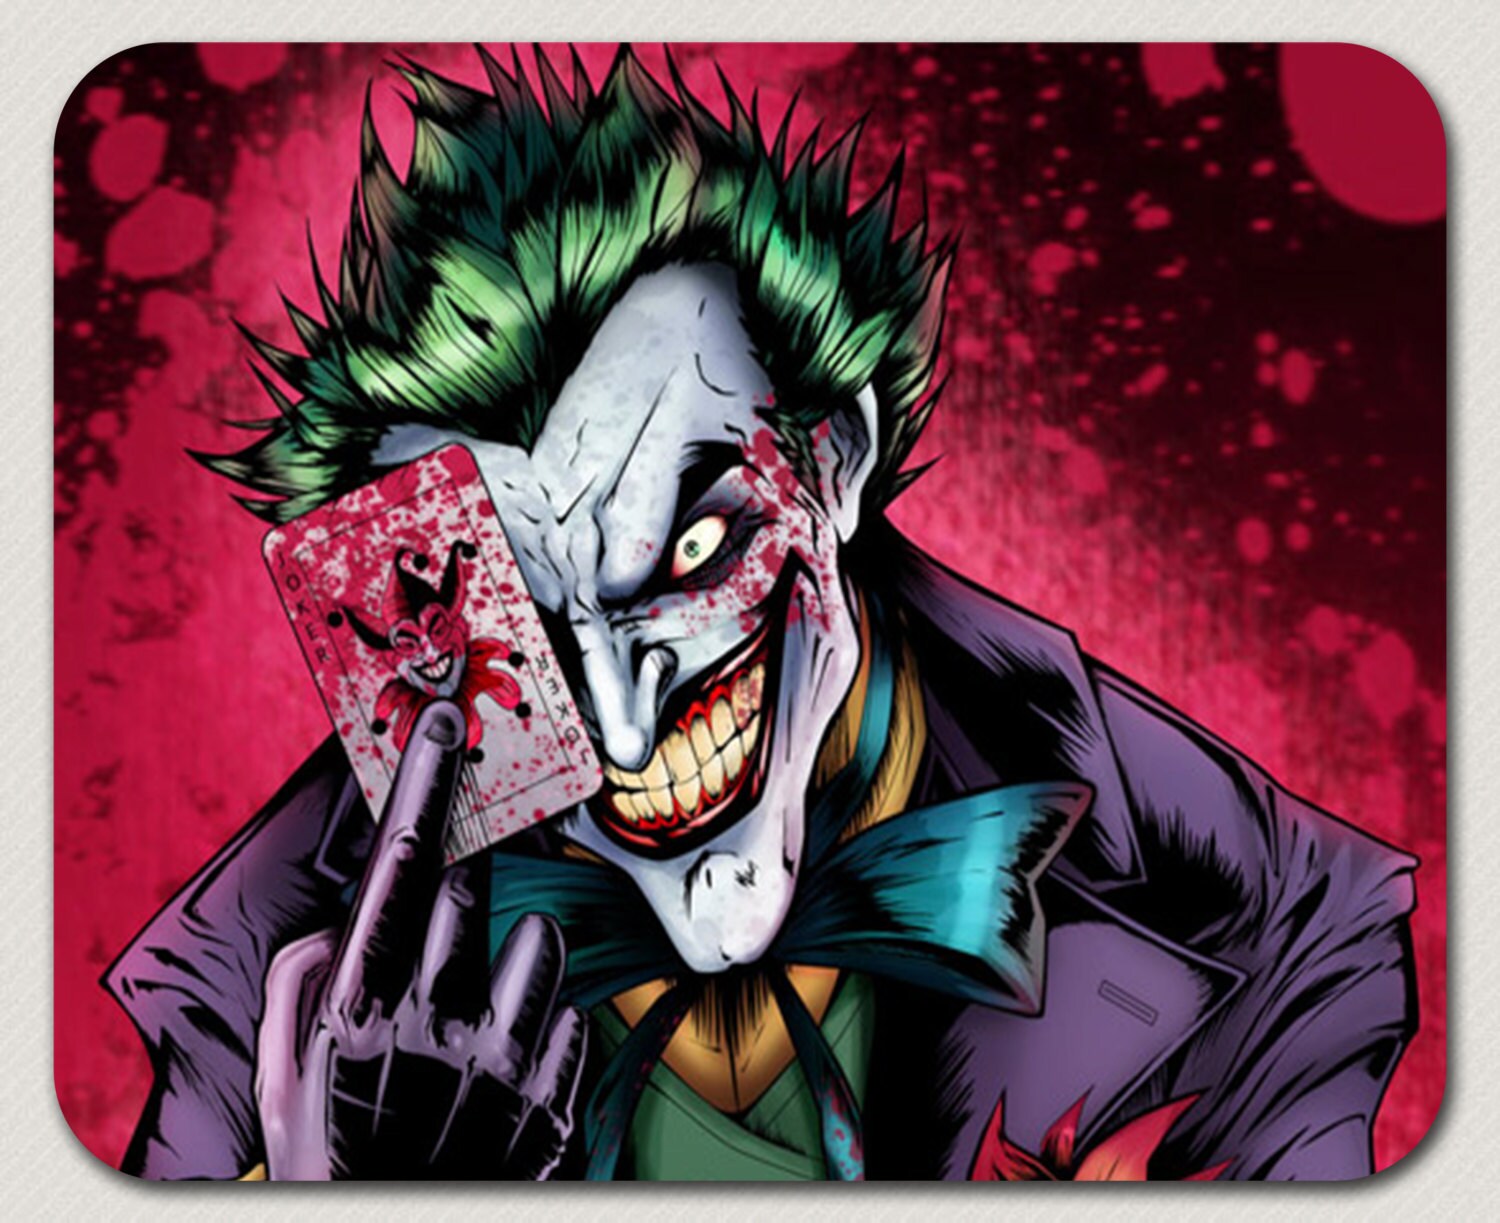 DC Comics Joker Crazy mouse pad gift unique geek nerd comic